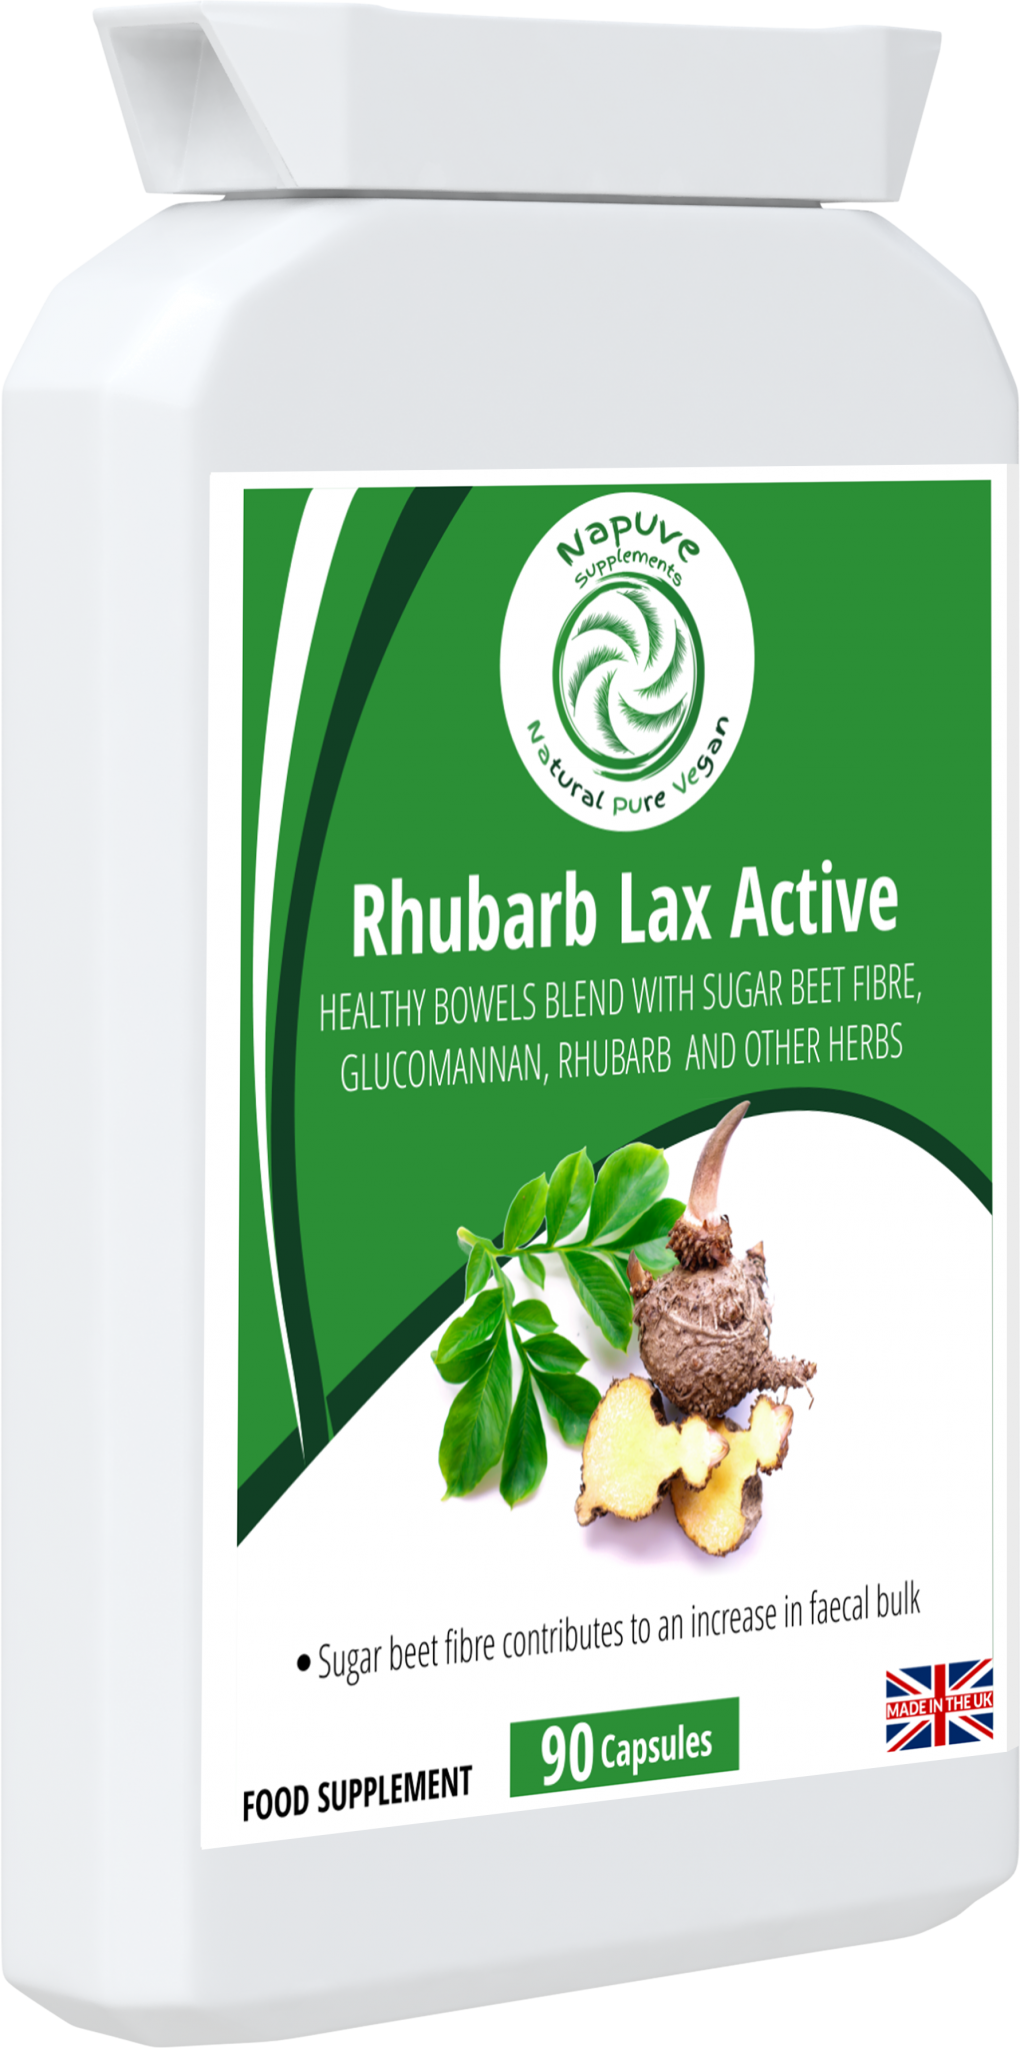 Rhubarb Lax Active - Herbal colon blend